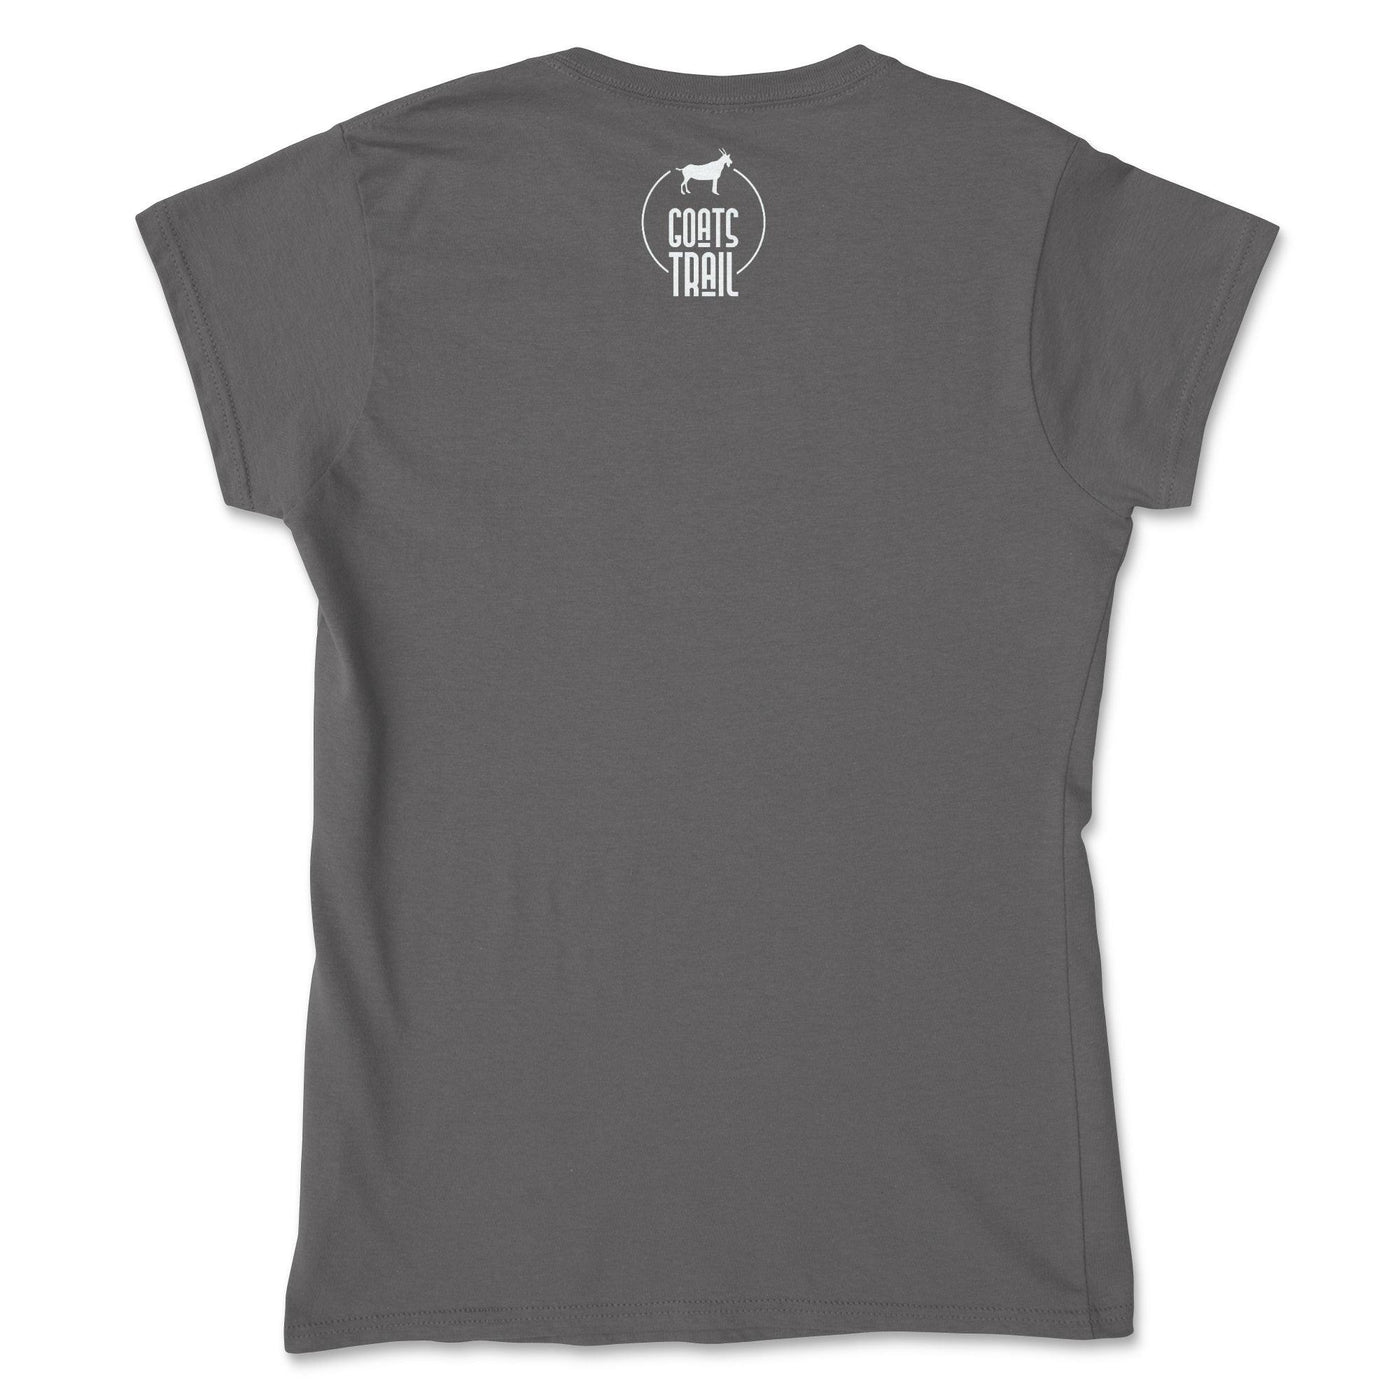 Bronco Women's T-shirt - Goats Trail